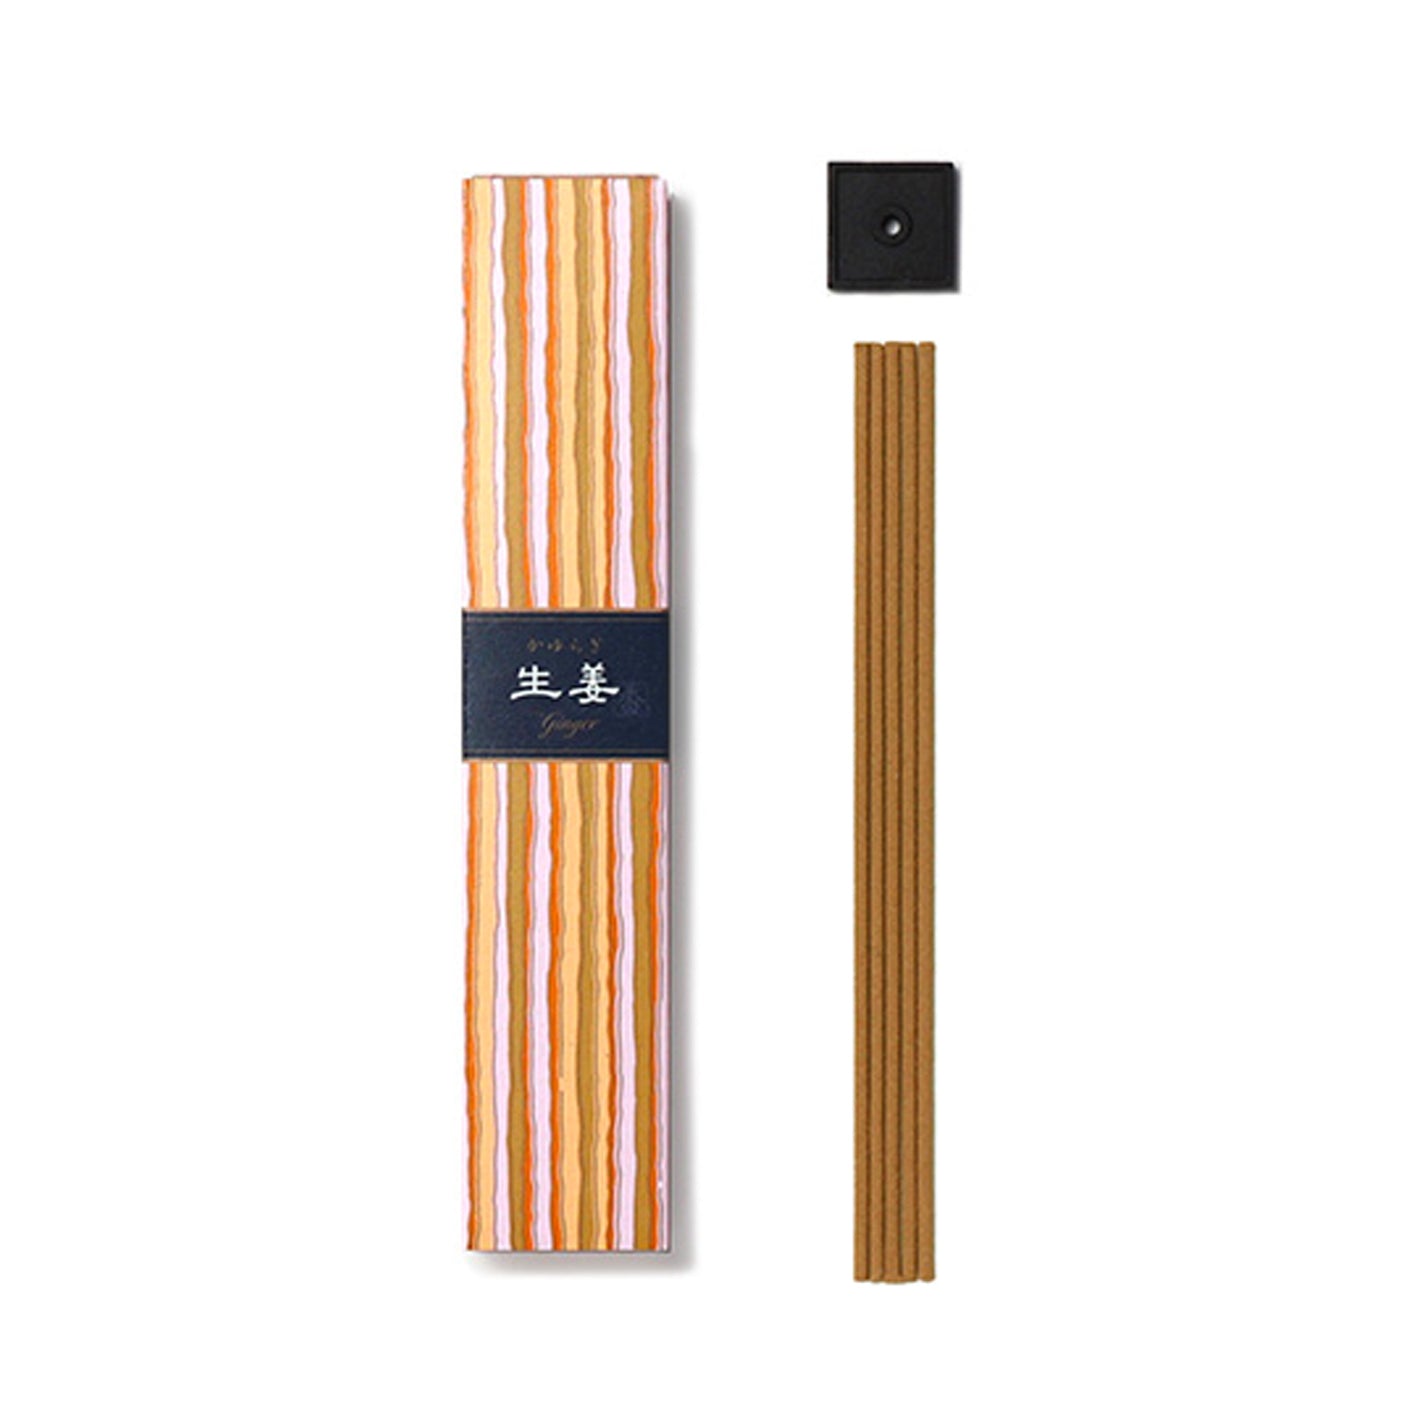 Nippon Kodo Kayuragi Incense Sticks - Ginger